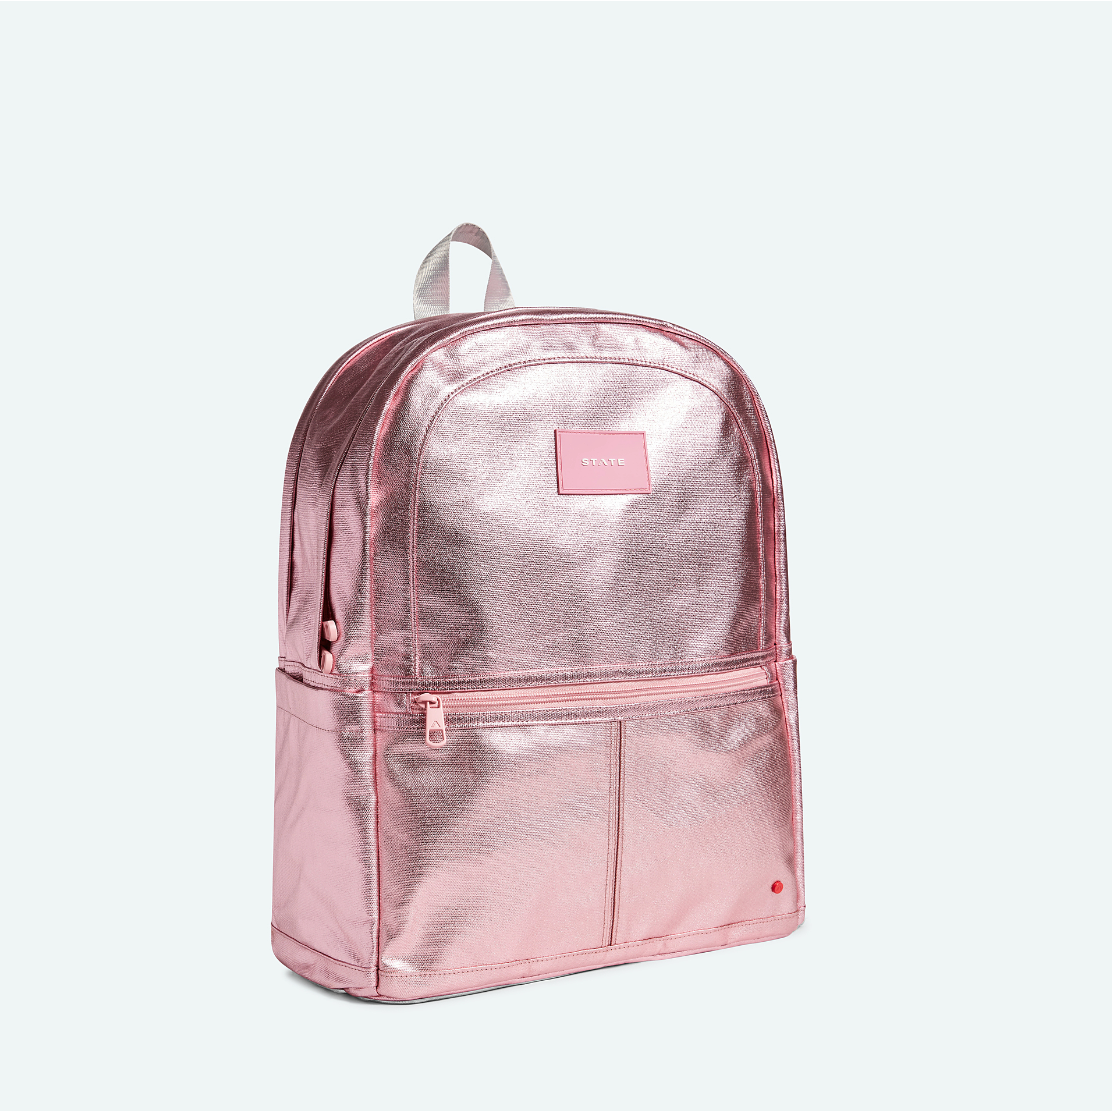 kane kids large backpack | pink/silver